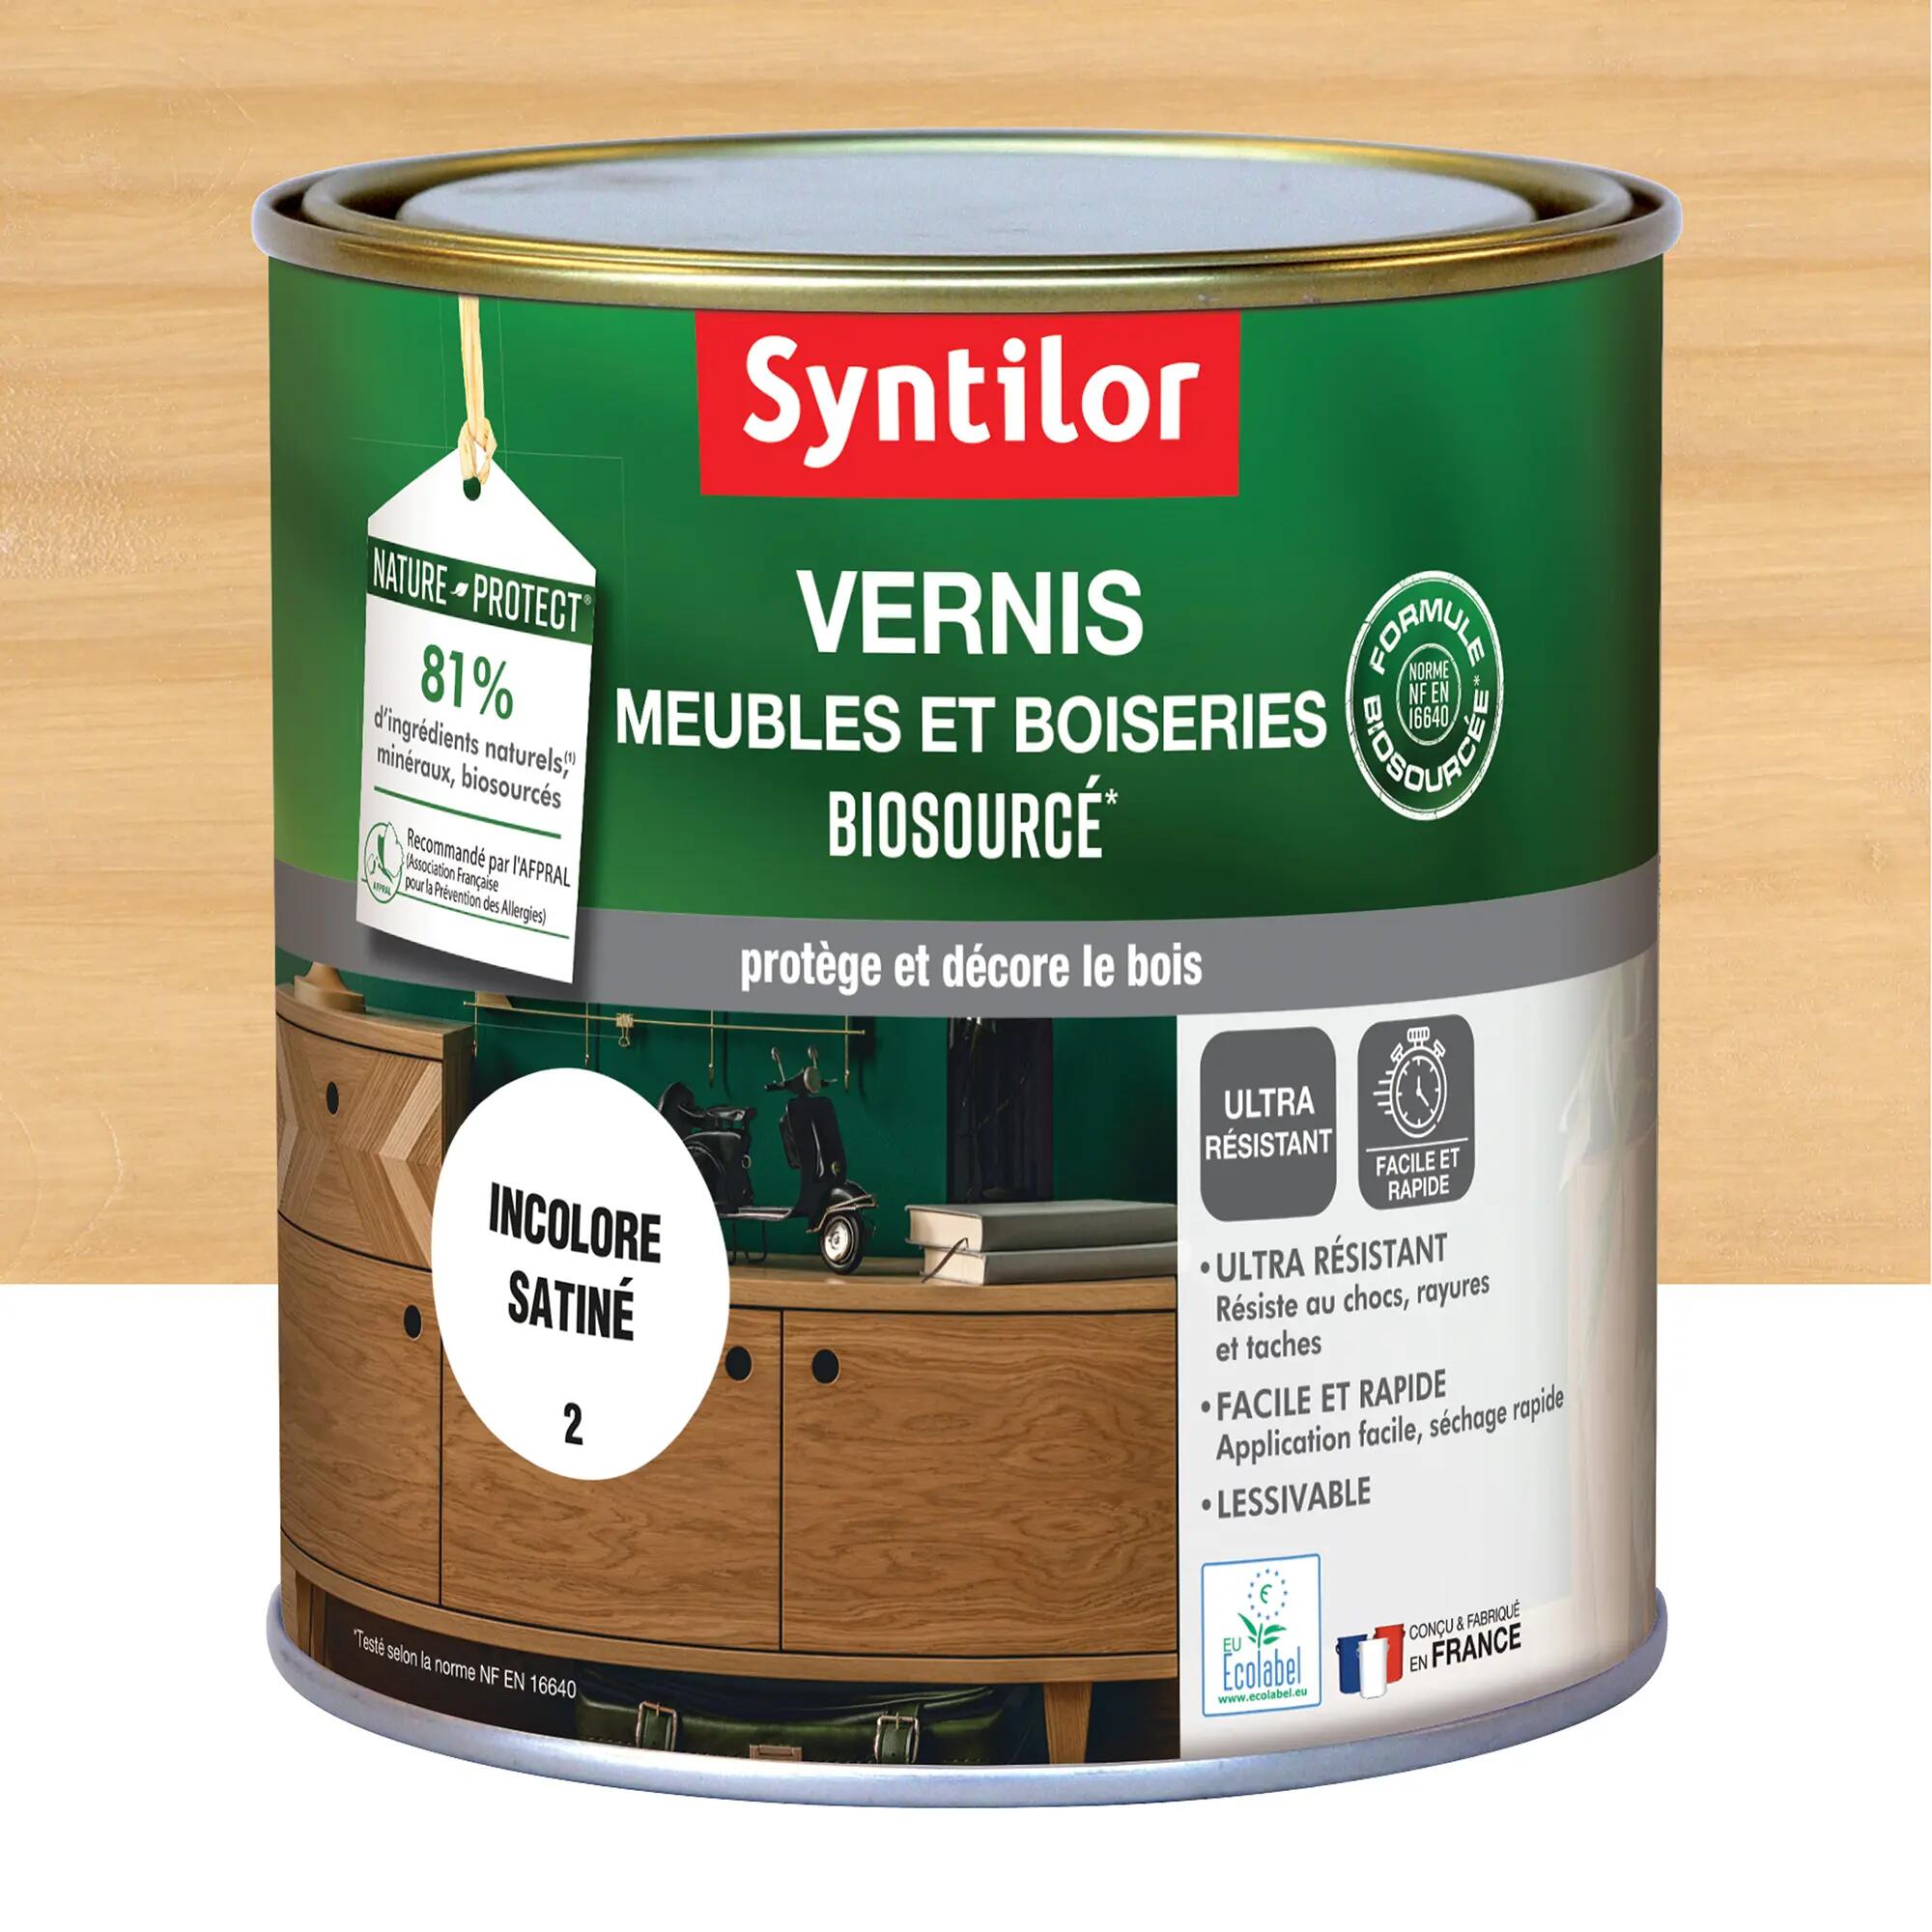 Syntilor - Vernis Marin Incolore Mat 2,5L : : Bricolage